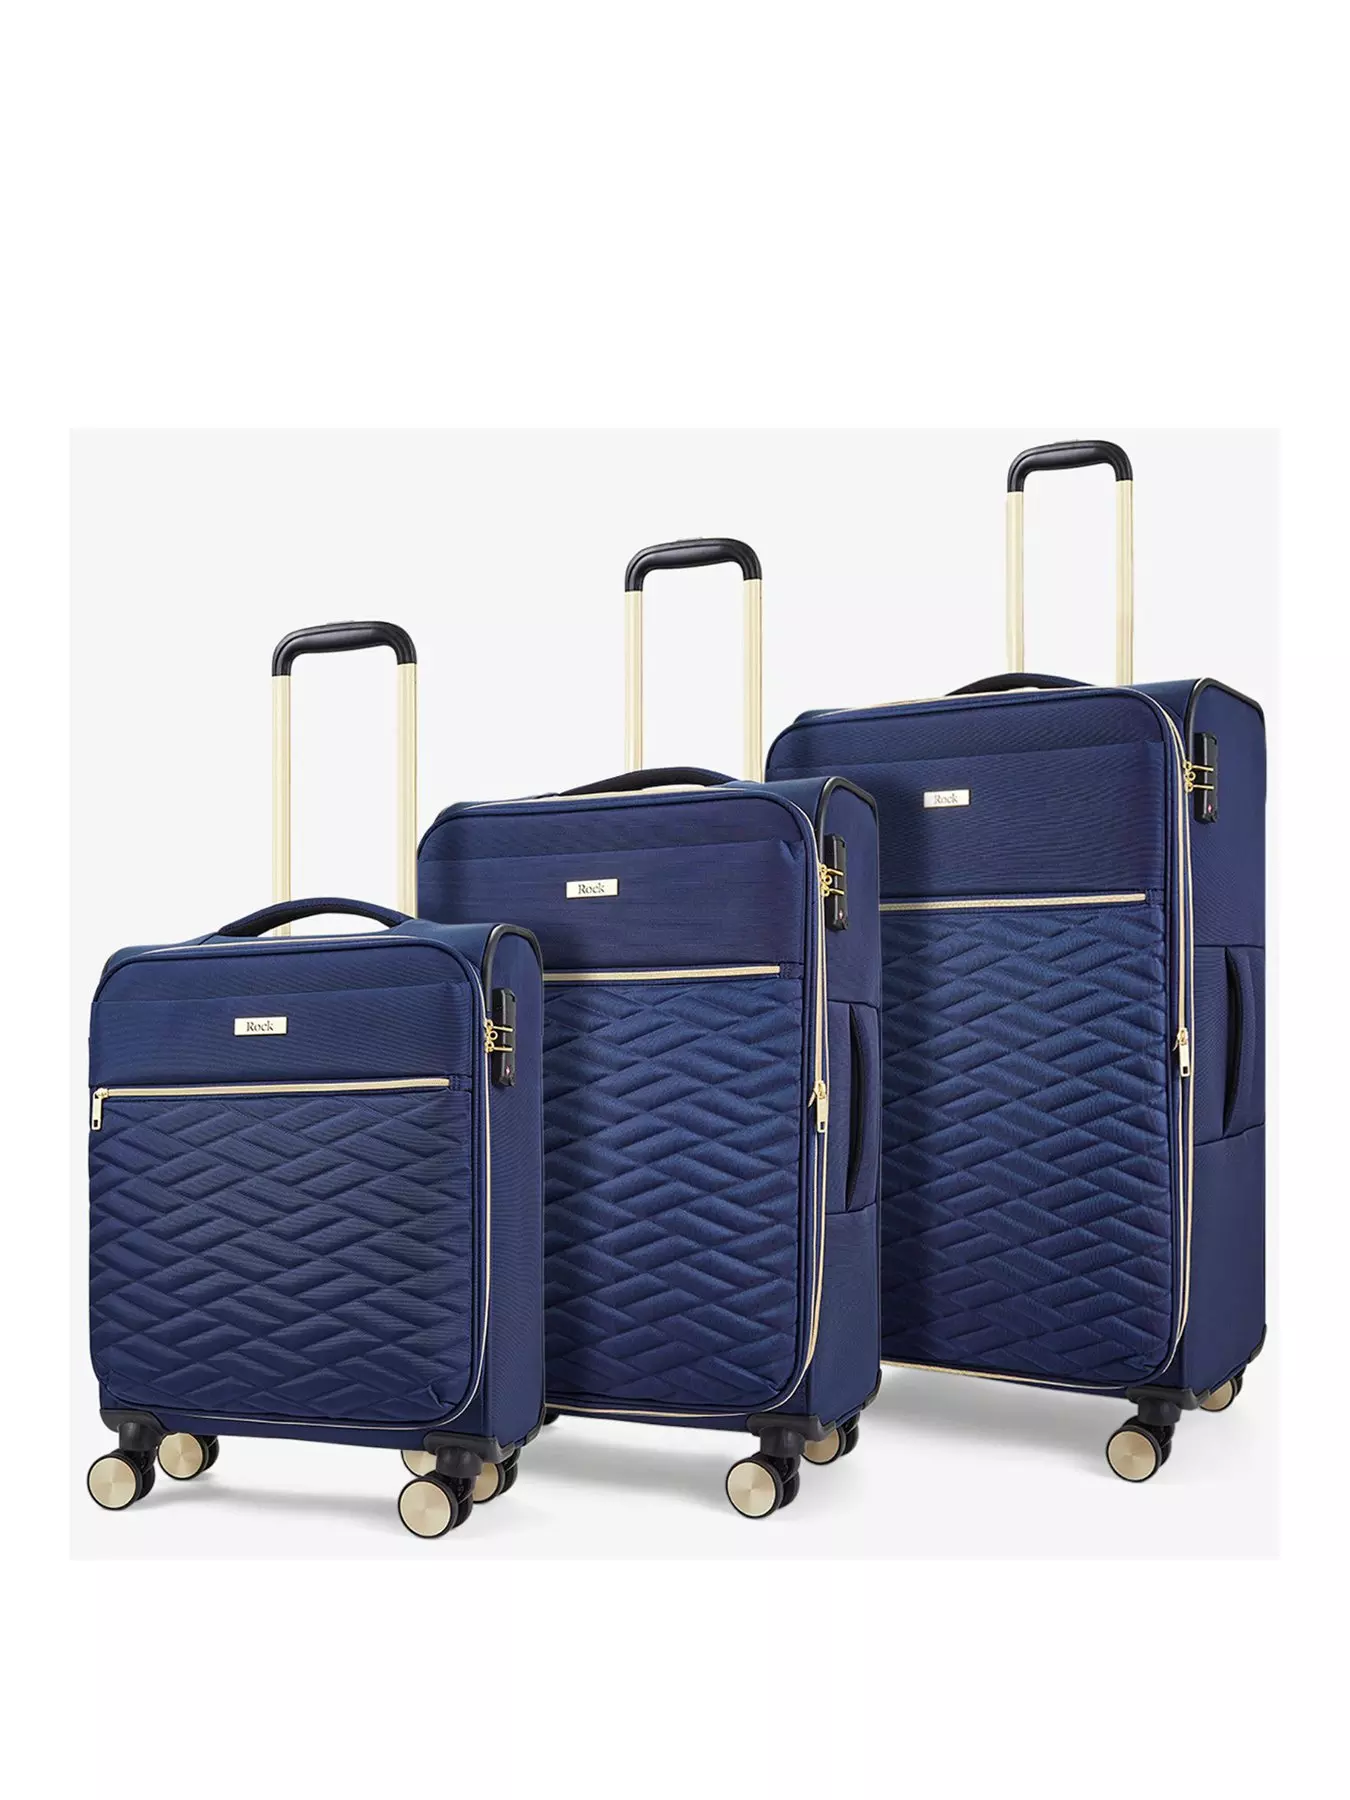 LONG VACATION Luggage Set 4 Piece Luggage Set ABS hardshell TSA Lock  Spinner Wheels Luggage Carry on Suitcase (APPLE GREEN, 6 piece set)